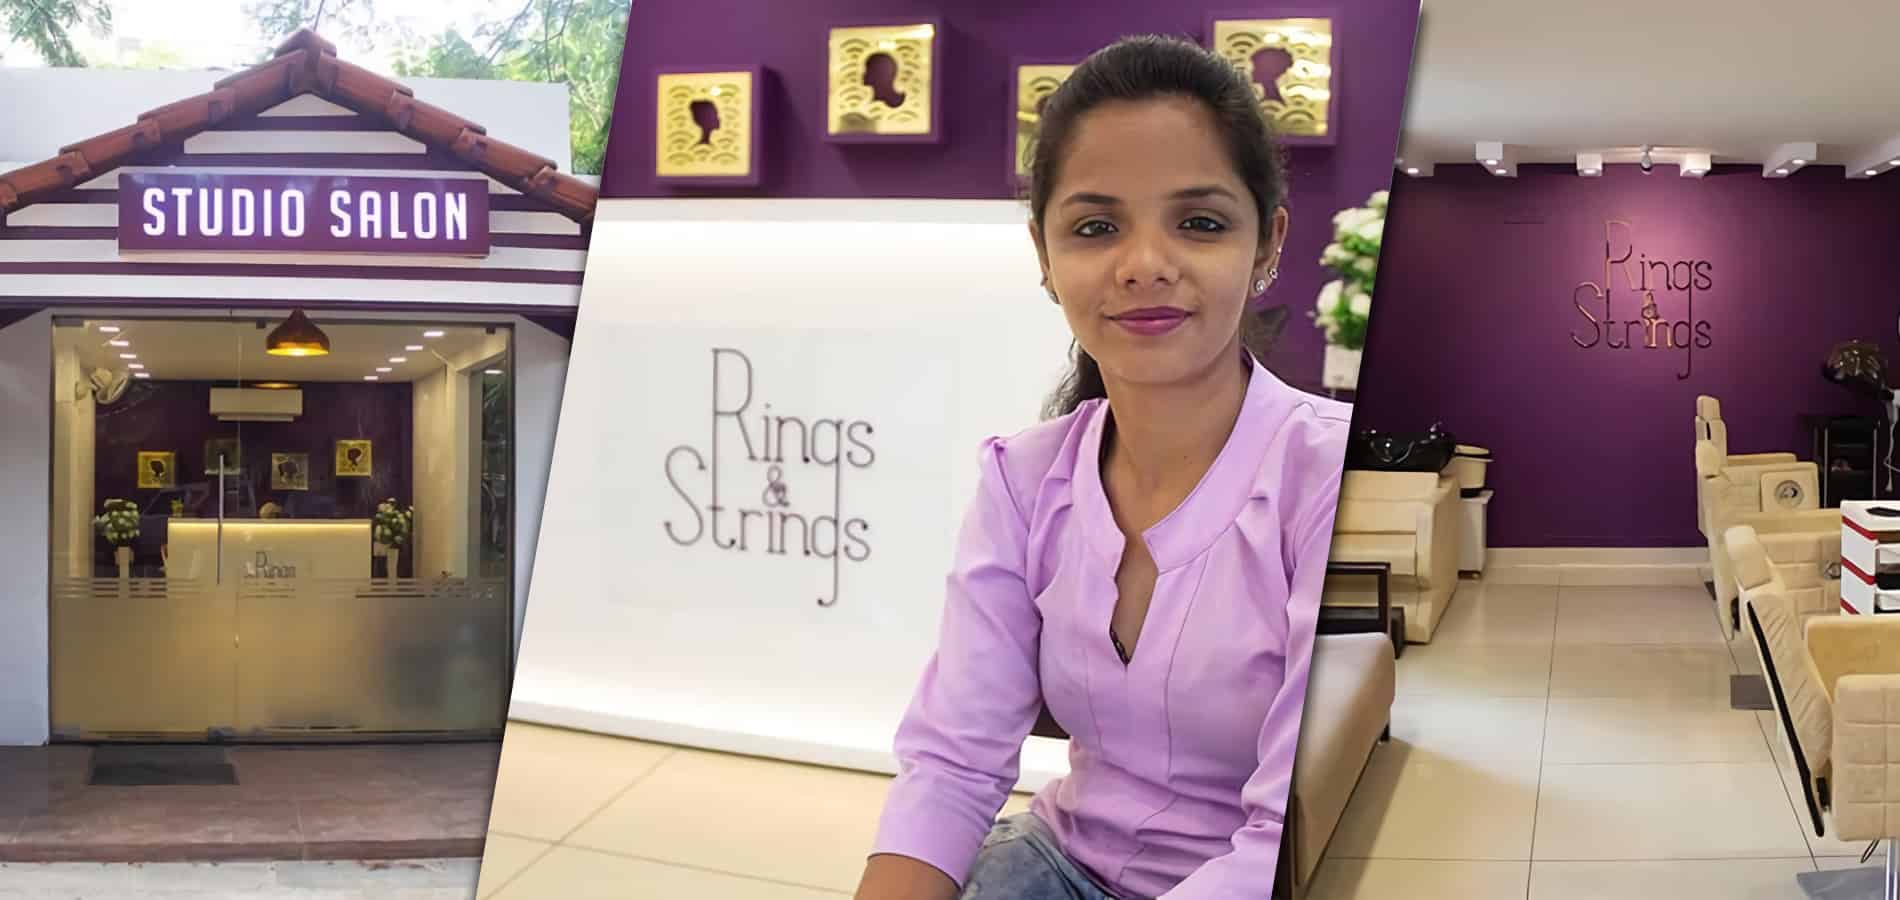 Lyn Vassou – Self-made chennai based makeup artist builds her own brand